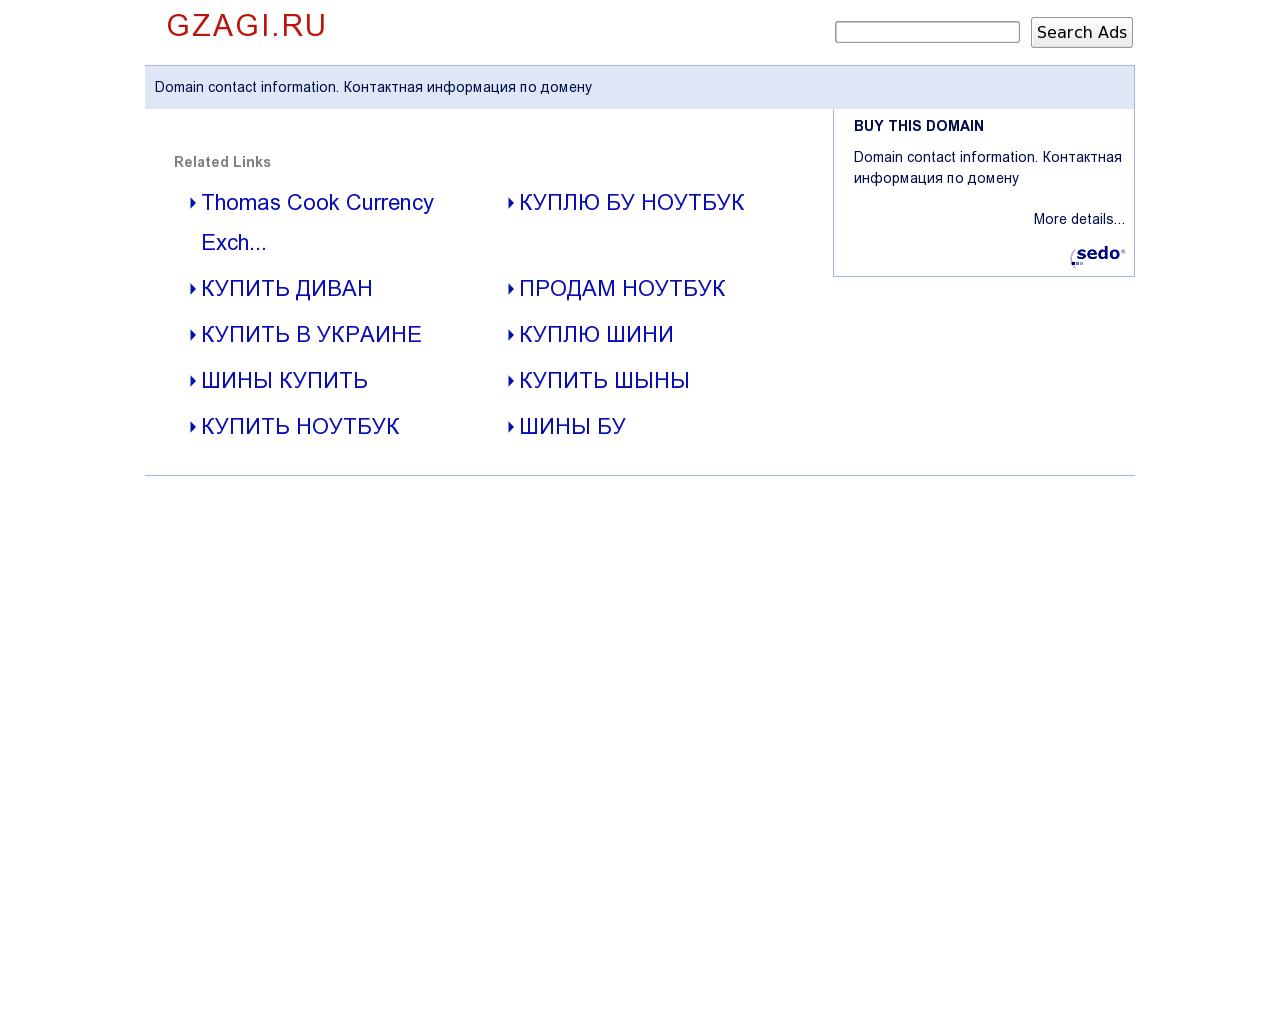 Изображение сайта gzagi.ru в разрешении 1280x1024